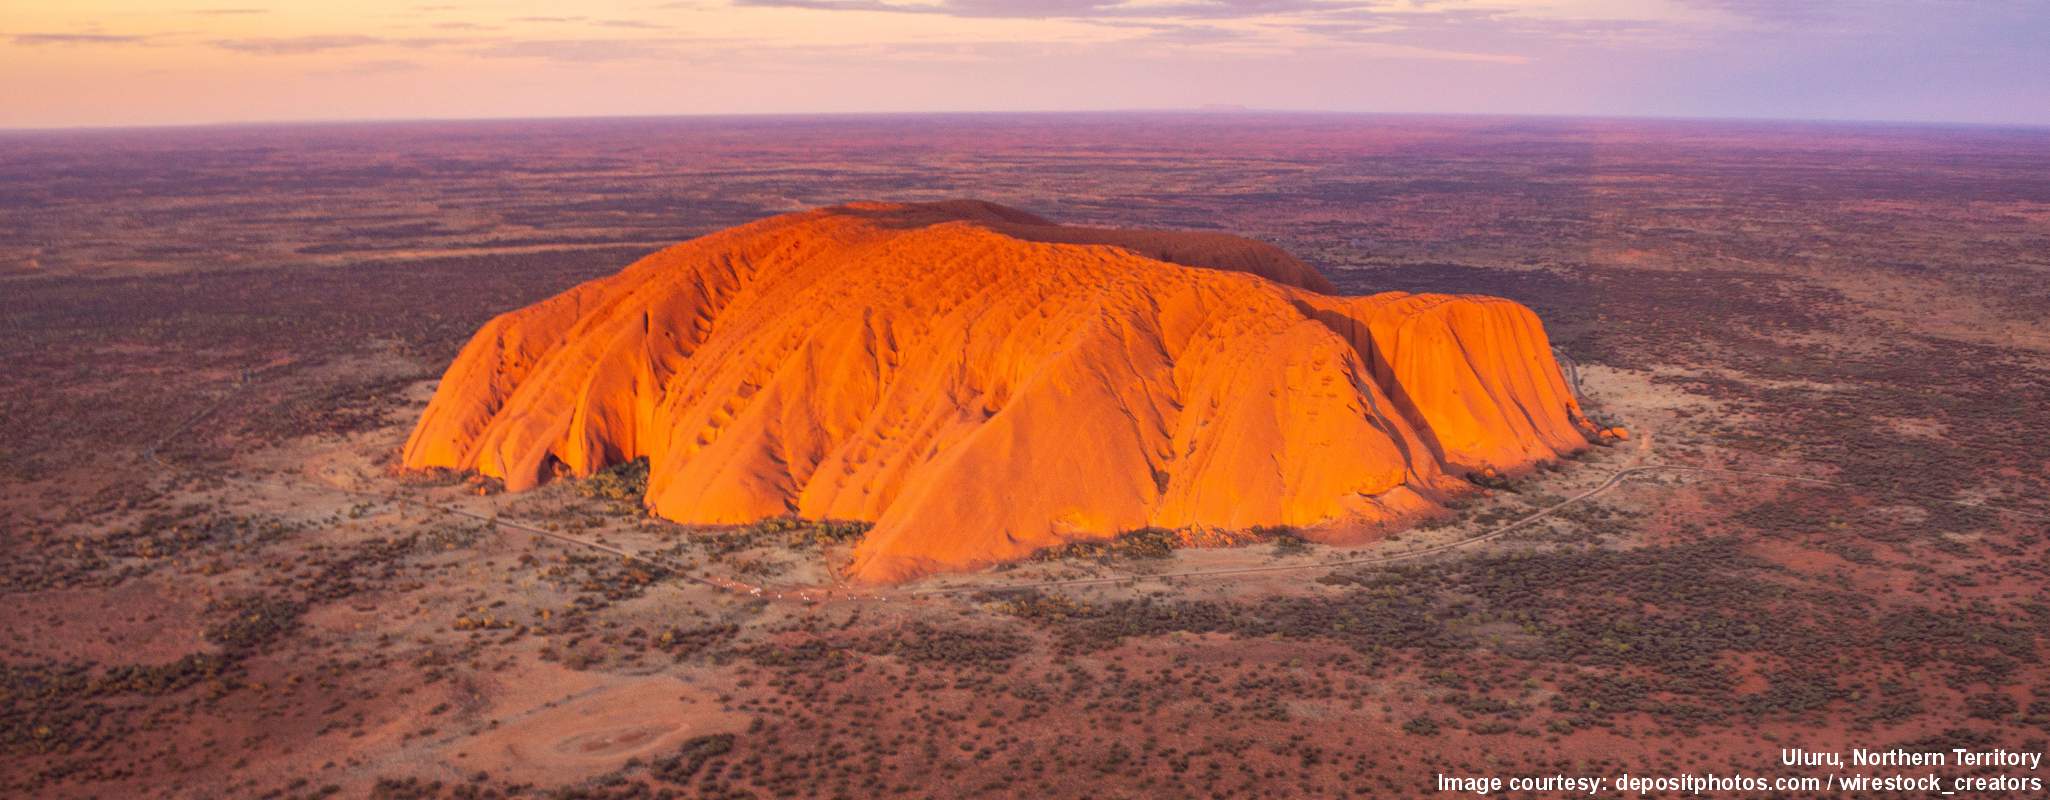 Uluru - Kata Tjuta National Park image